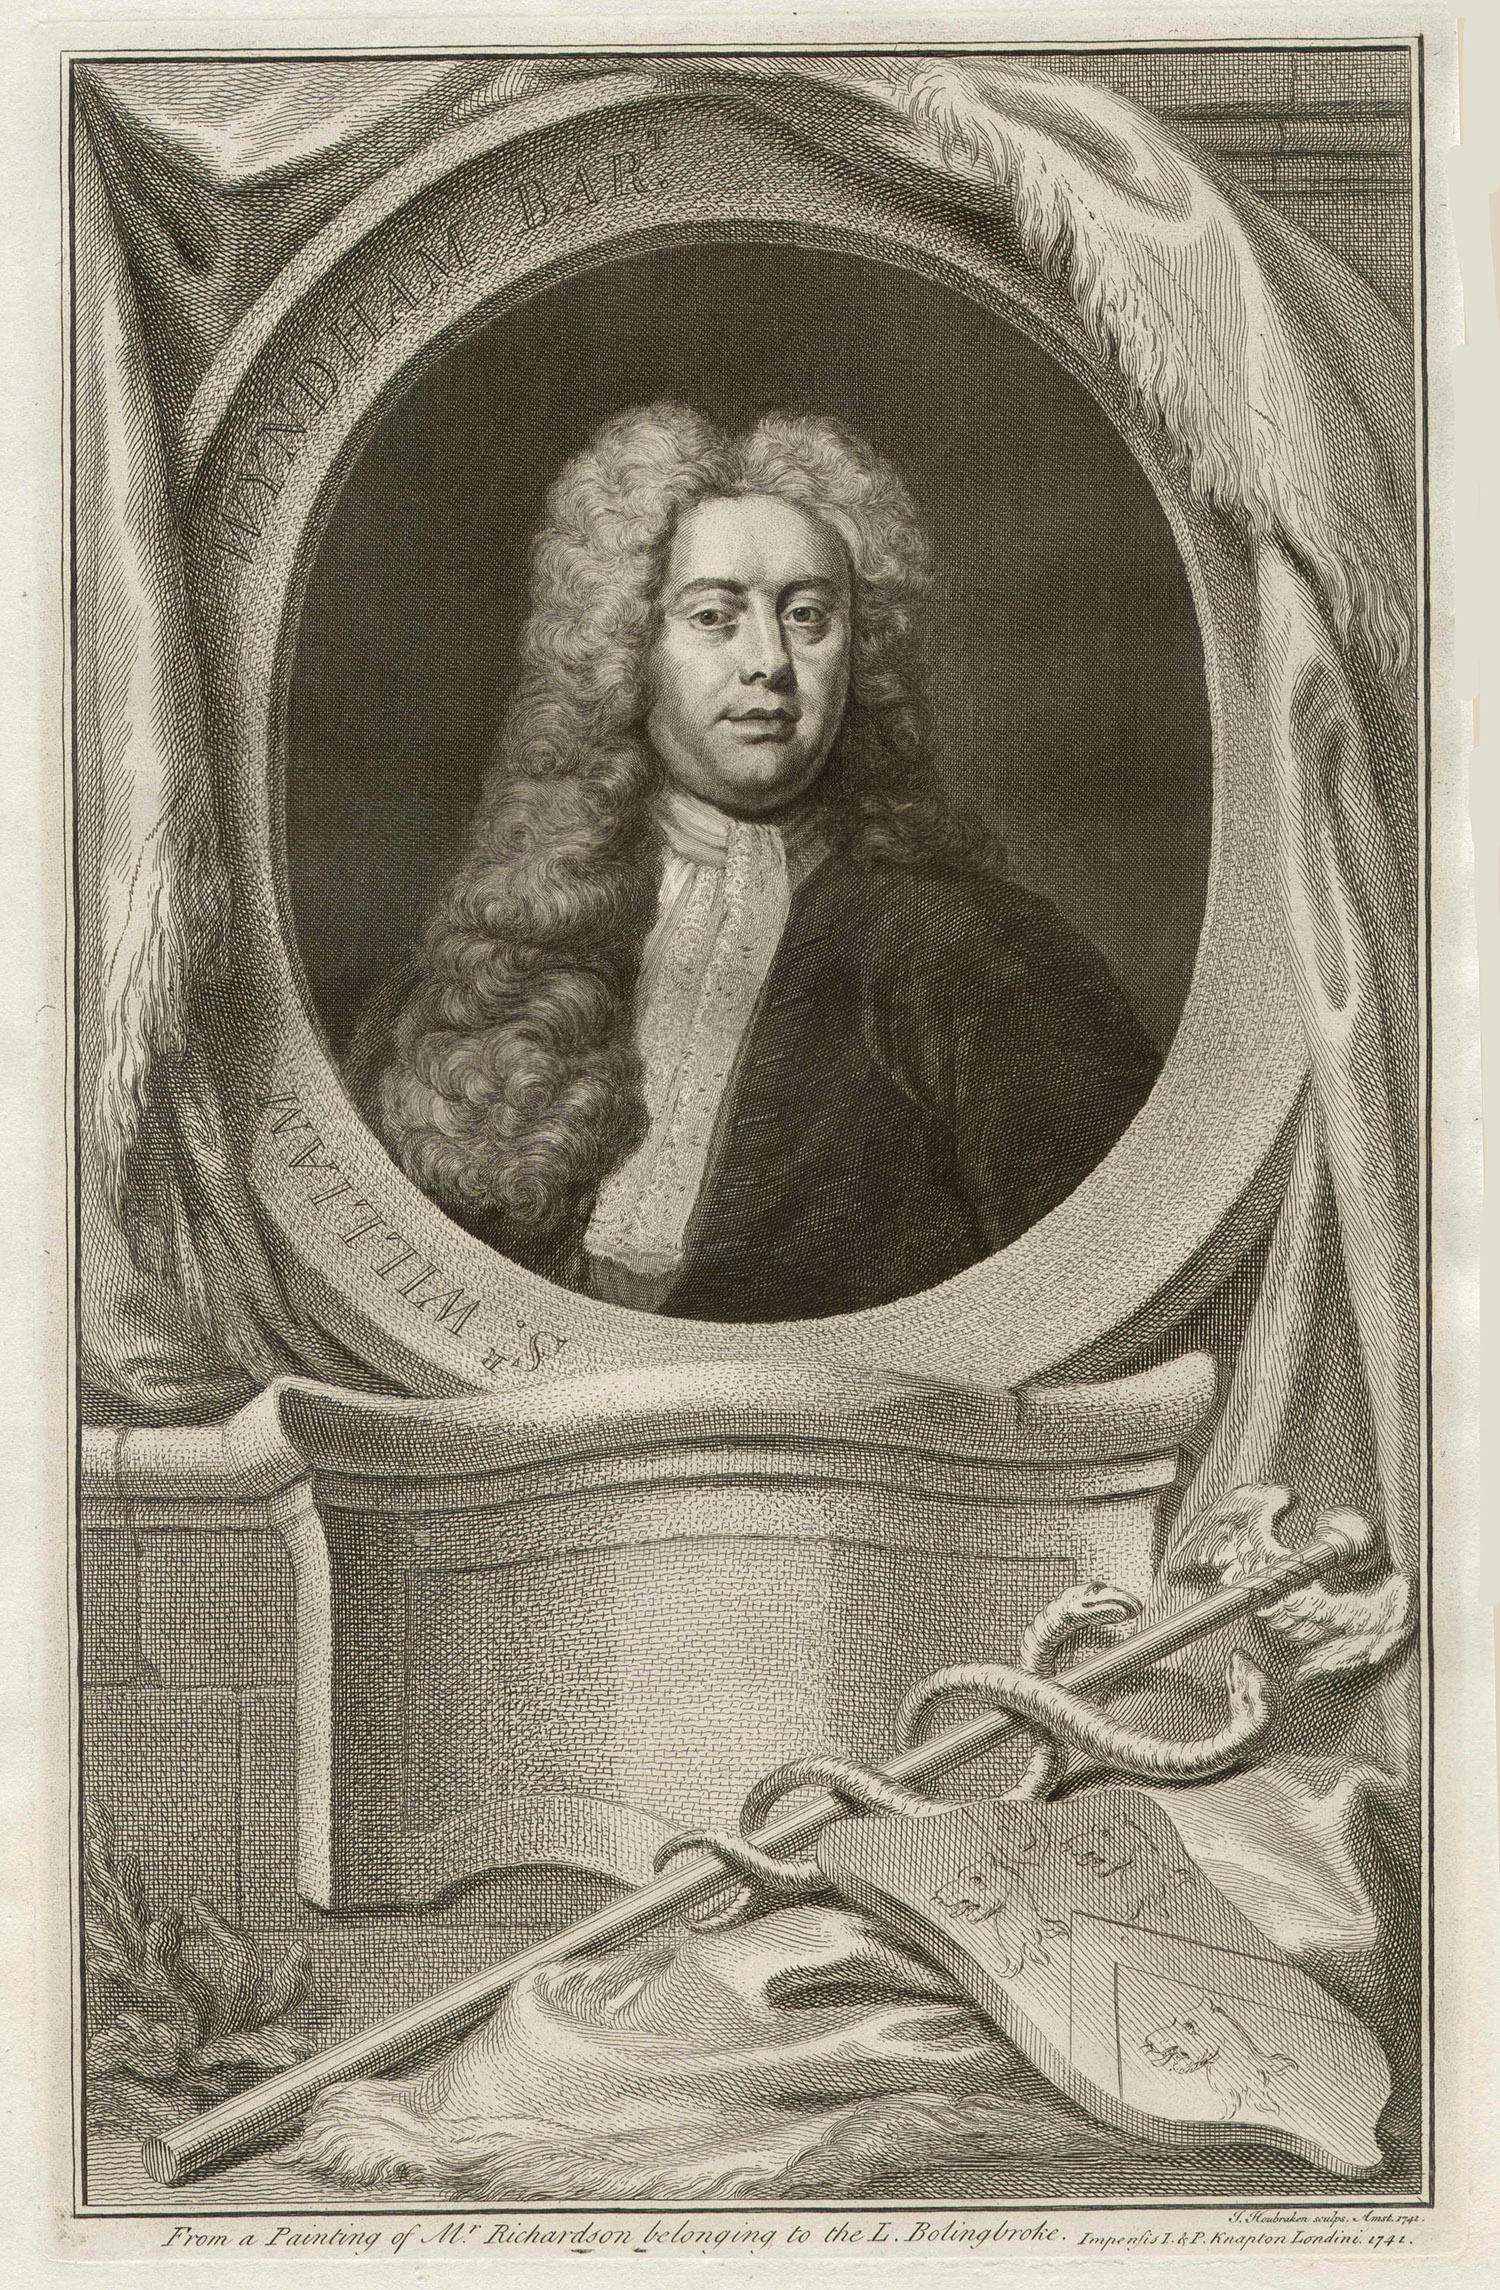 Sir William Wyndham, portrait engraving, c1820